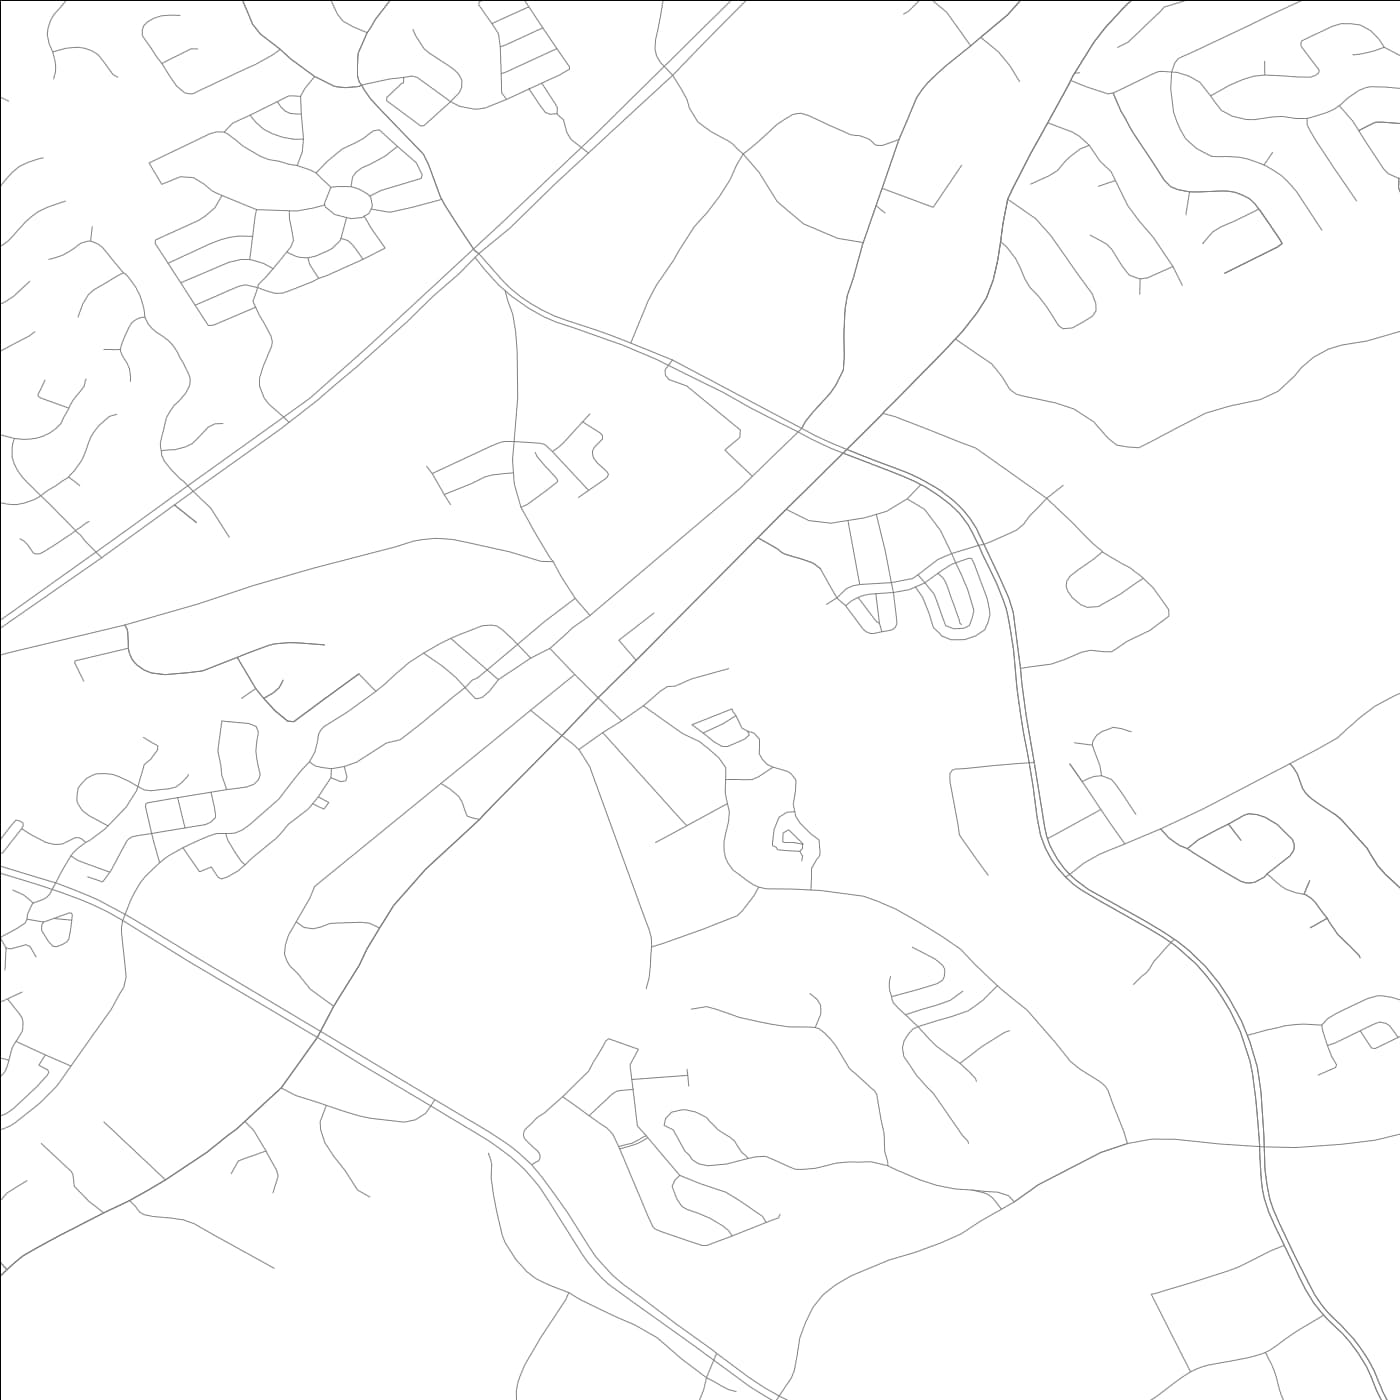 ROAD MAP OF SUWANEE, GEORGIA BY MAPBAKES